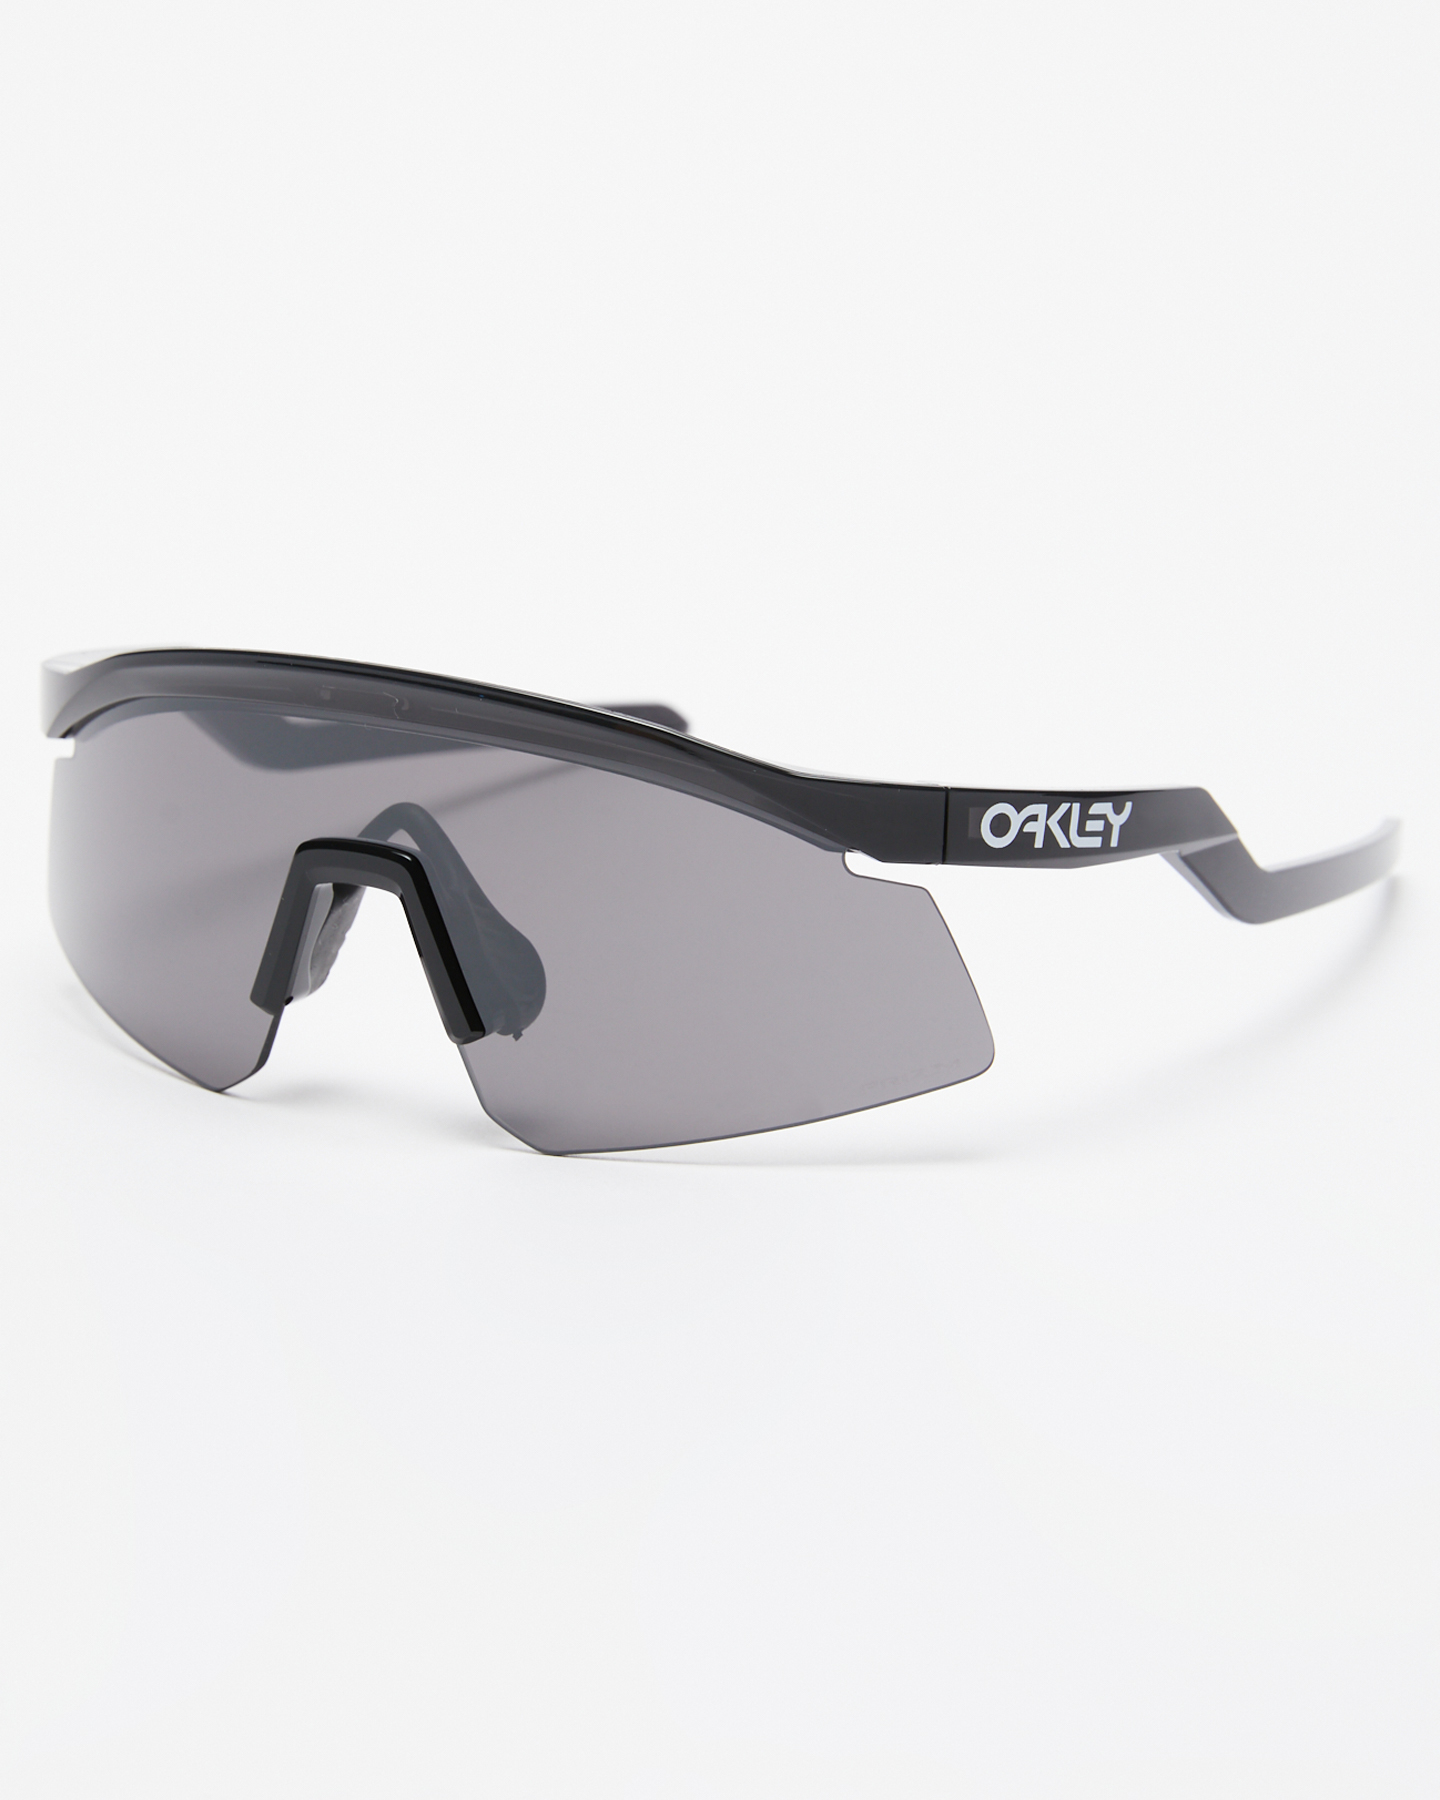 Oakley Hydra Sunglasses - Black Ink | SurfStitch